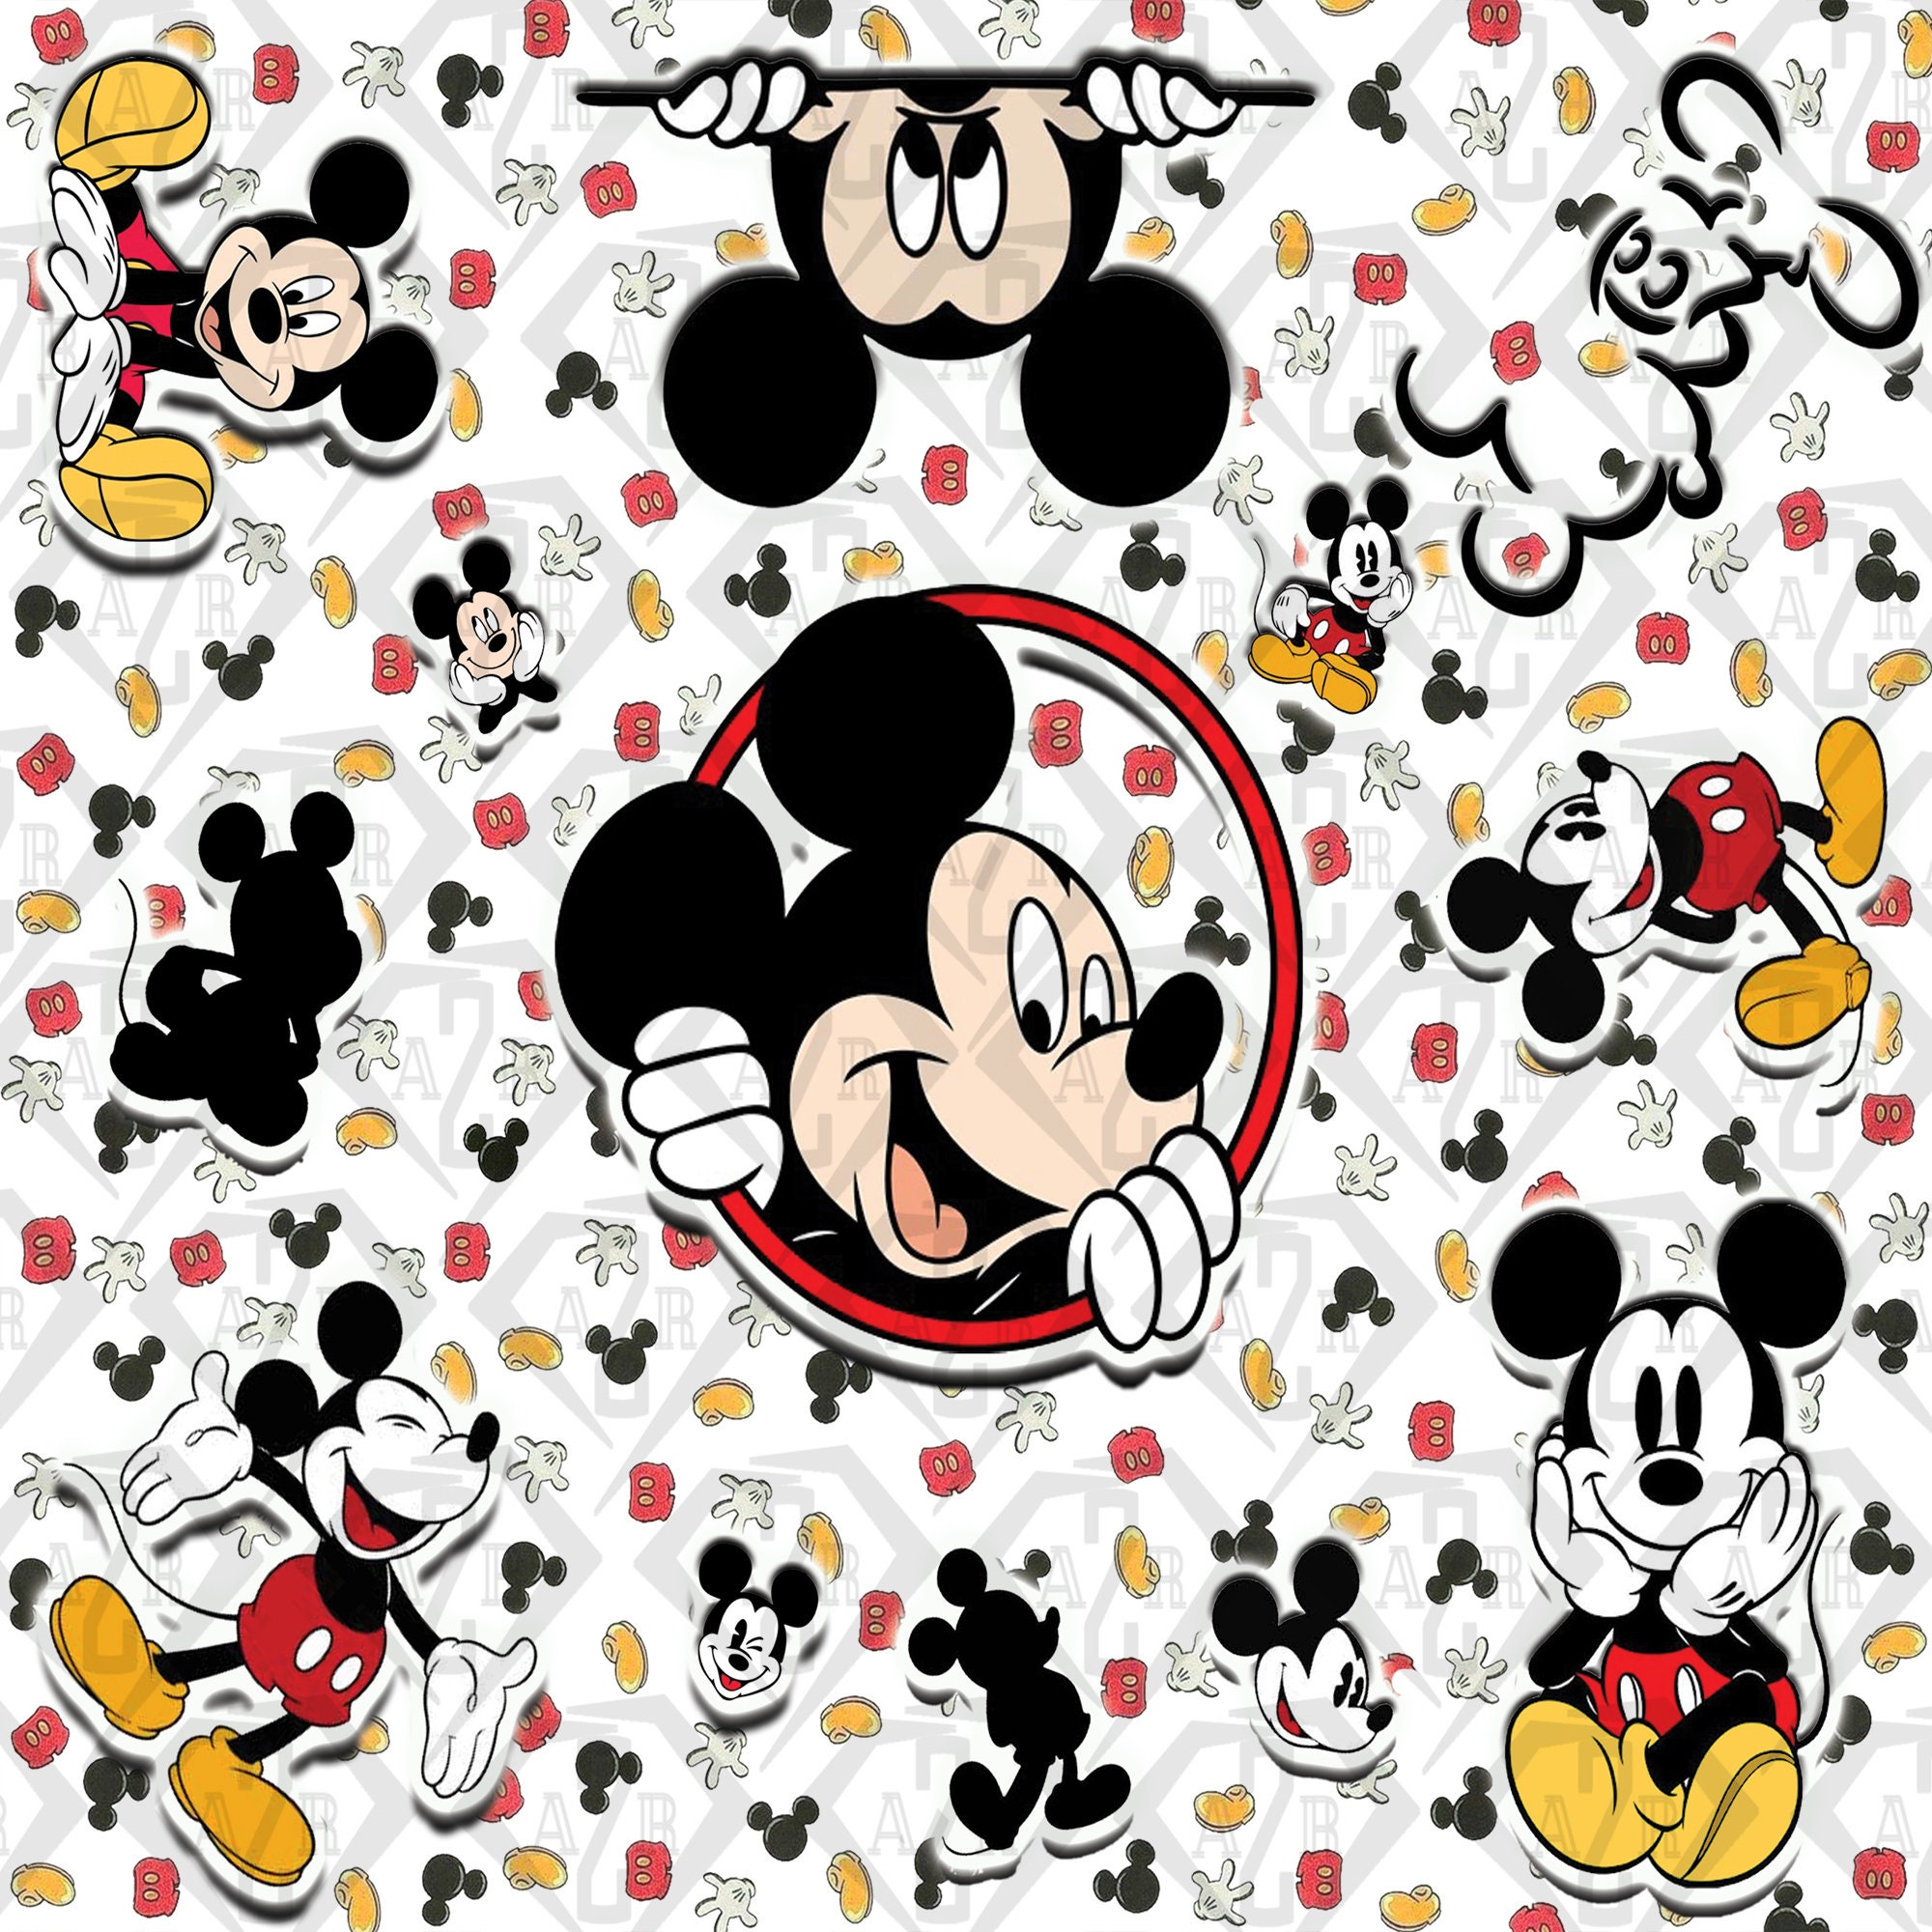 Mickey Tumbler, Mickey Sublimation StraightTapered Wrap Skinny Tumbler,  Mickey Mouse Orca Sublimation Skinny Tumbler